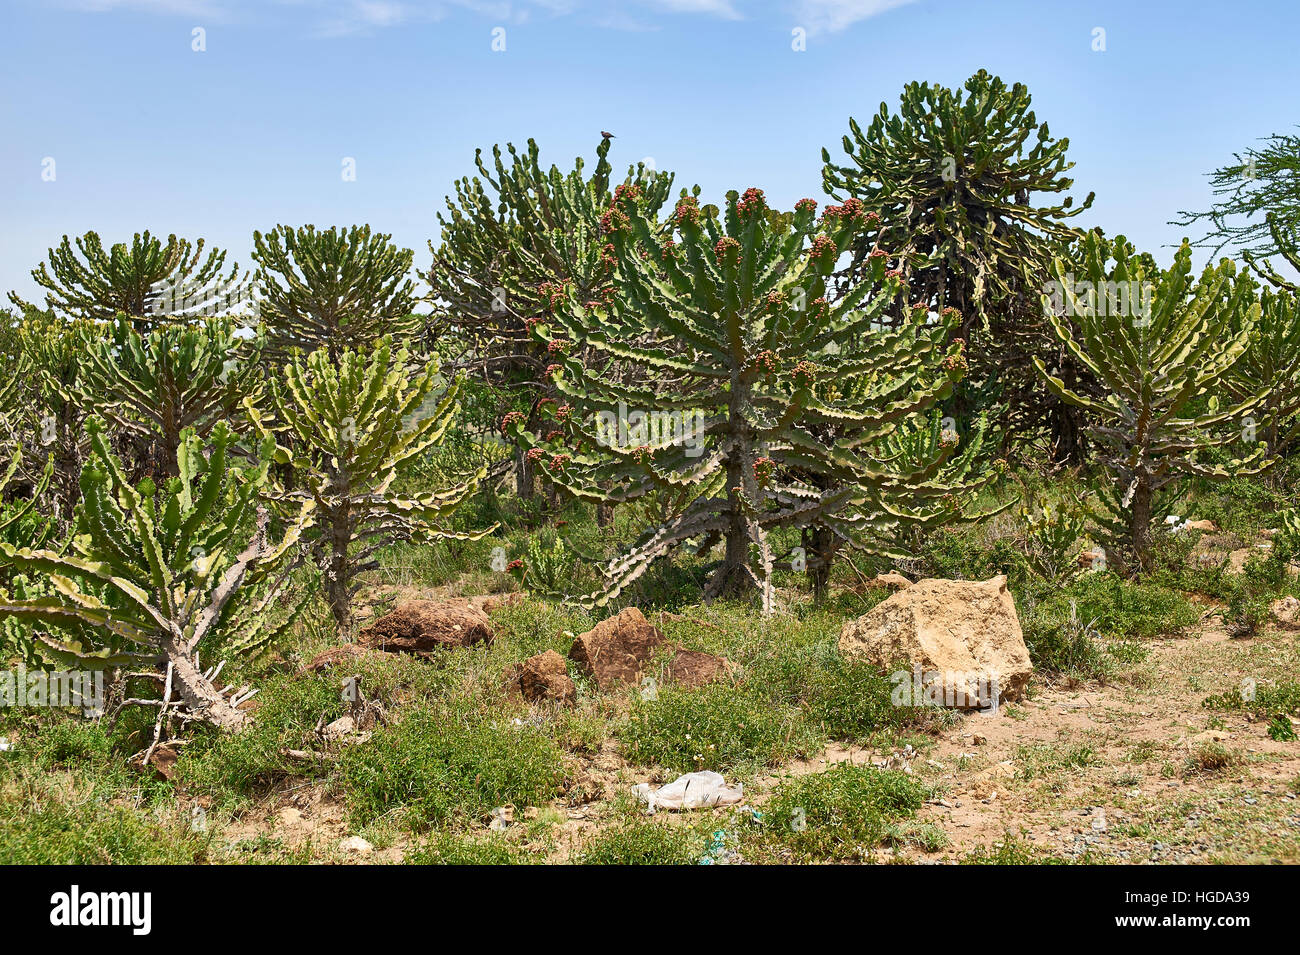 Flowering Euphorbia trees, Tanzania Stock Photo